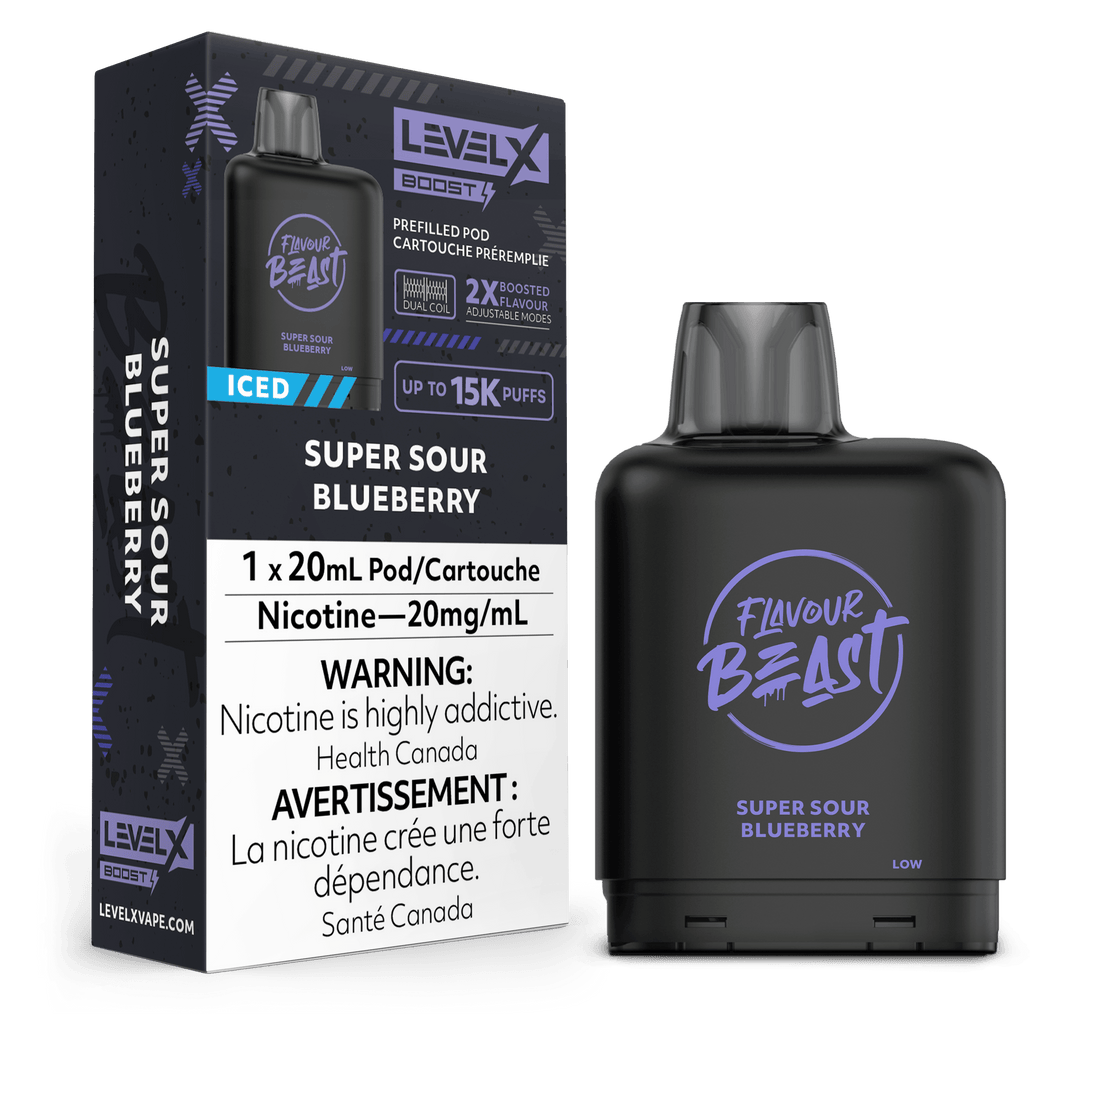 Level X Boost Flavour Beast - Super Sour Blueberry Iced - Vapor Shoppe